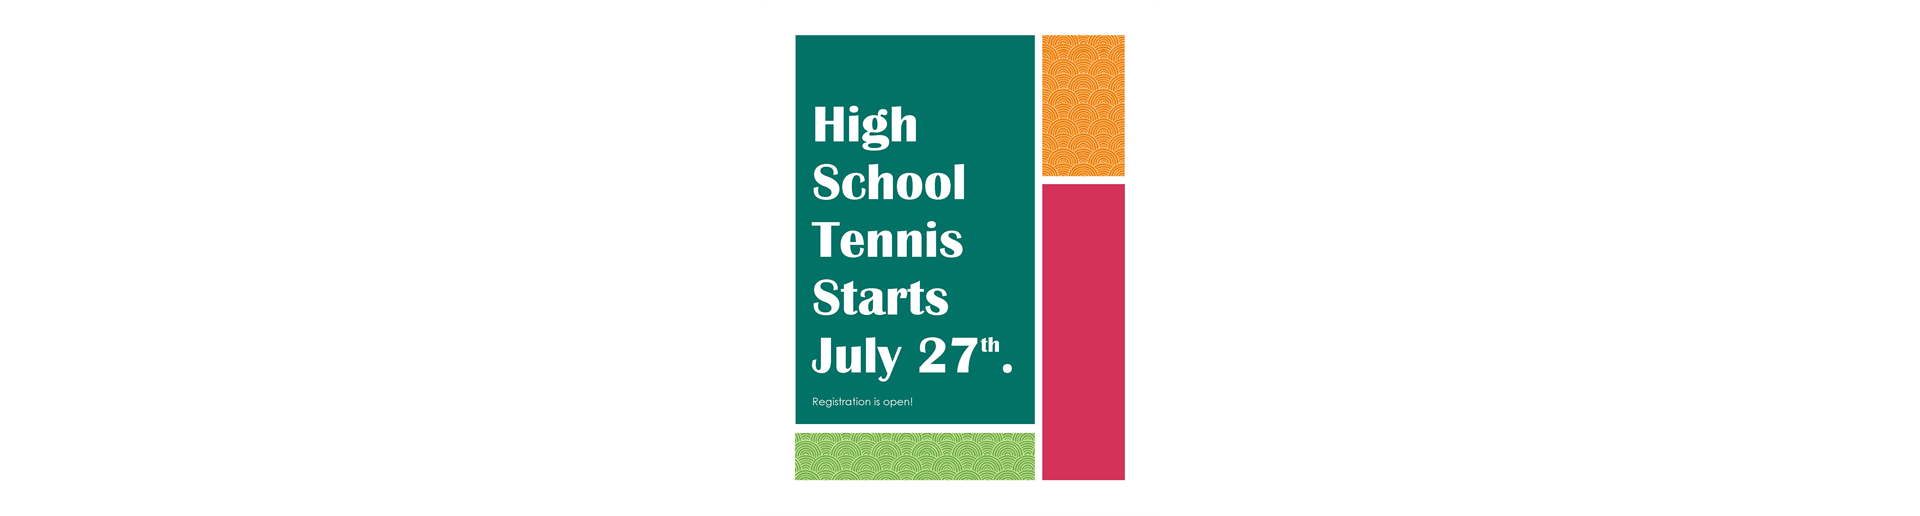 High School tennis starts soon!